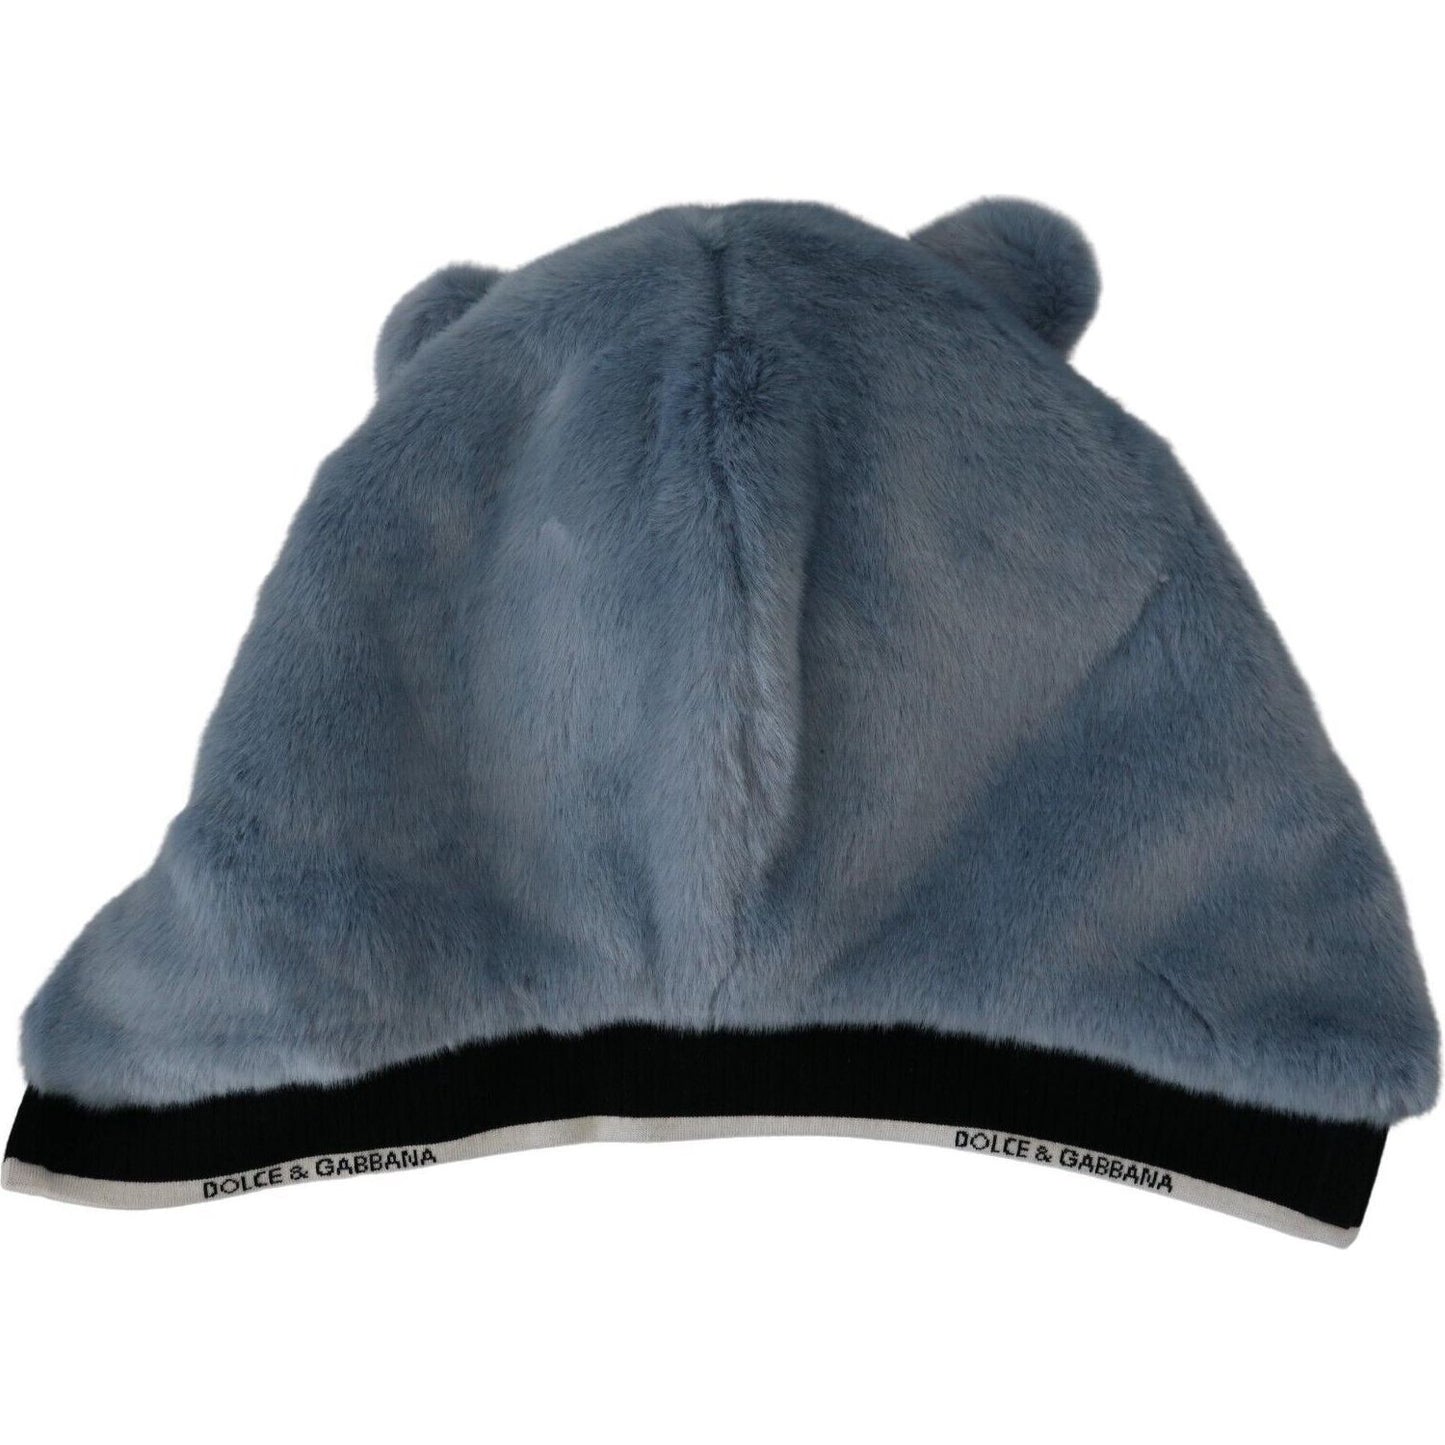 Dolce & Gabbana Stunning Italian Whole Head Hat in Blue blue-bear-fur-whole-head-cap-one-size-polyester-hat